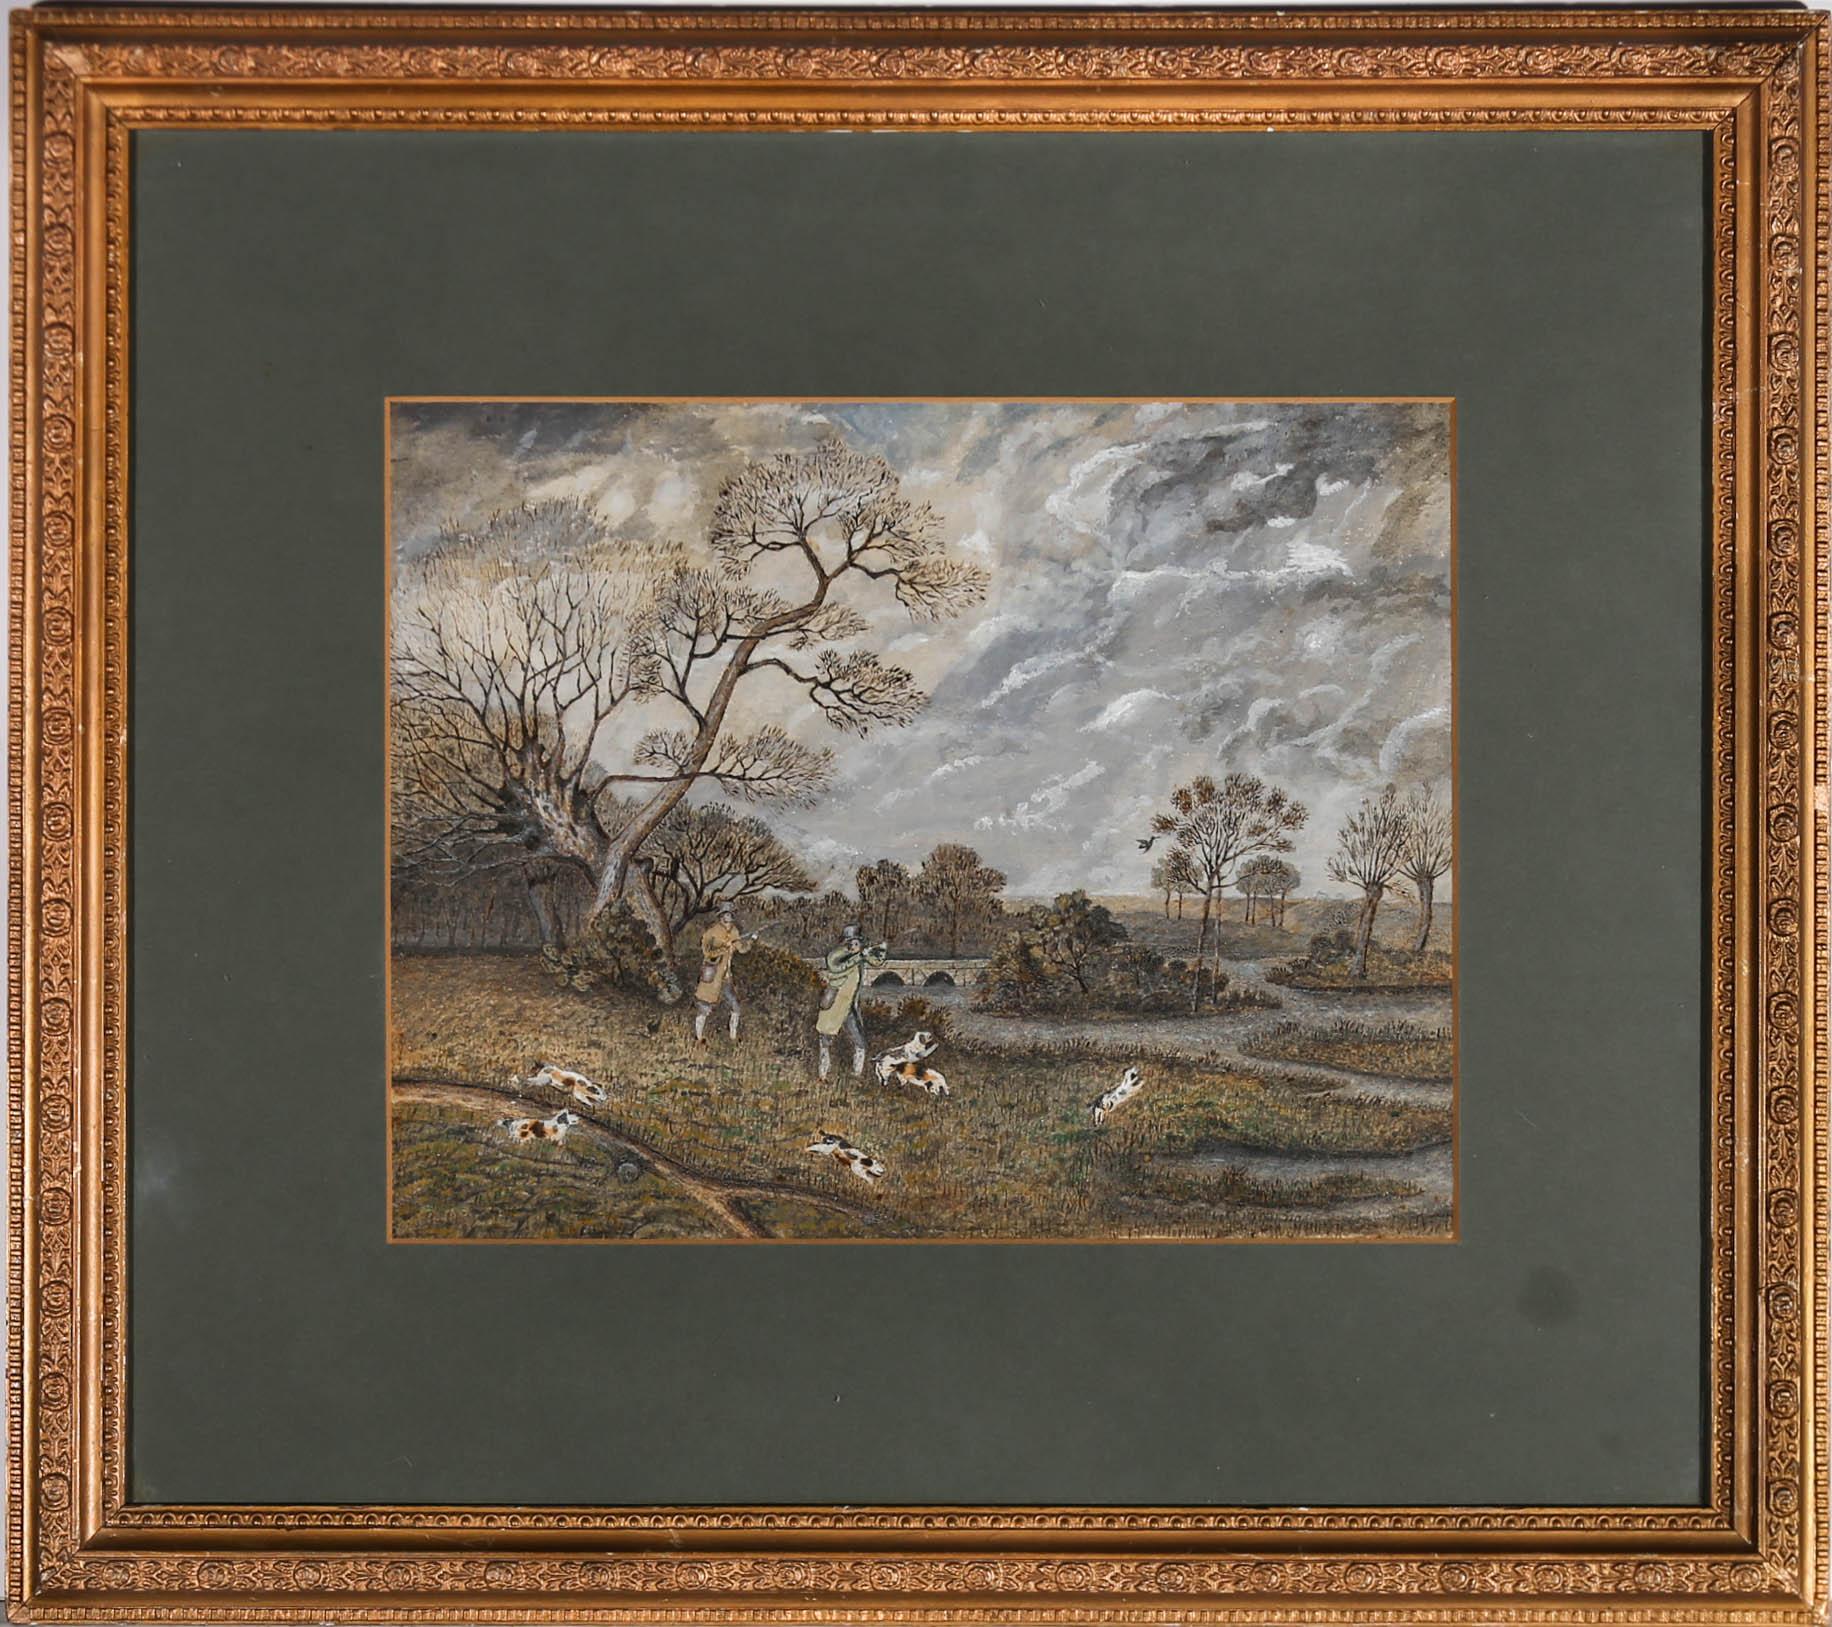 Unknown Landscape Art - Framed Naive 19th Century Watercolour - Walking Guns in a Landscape